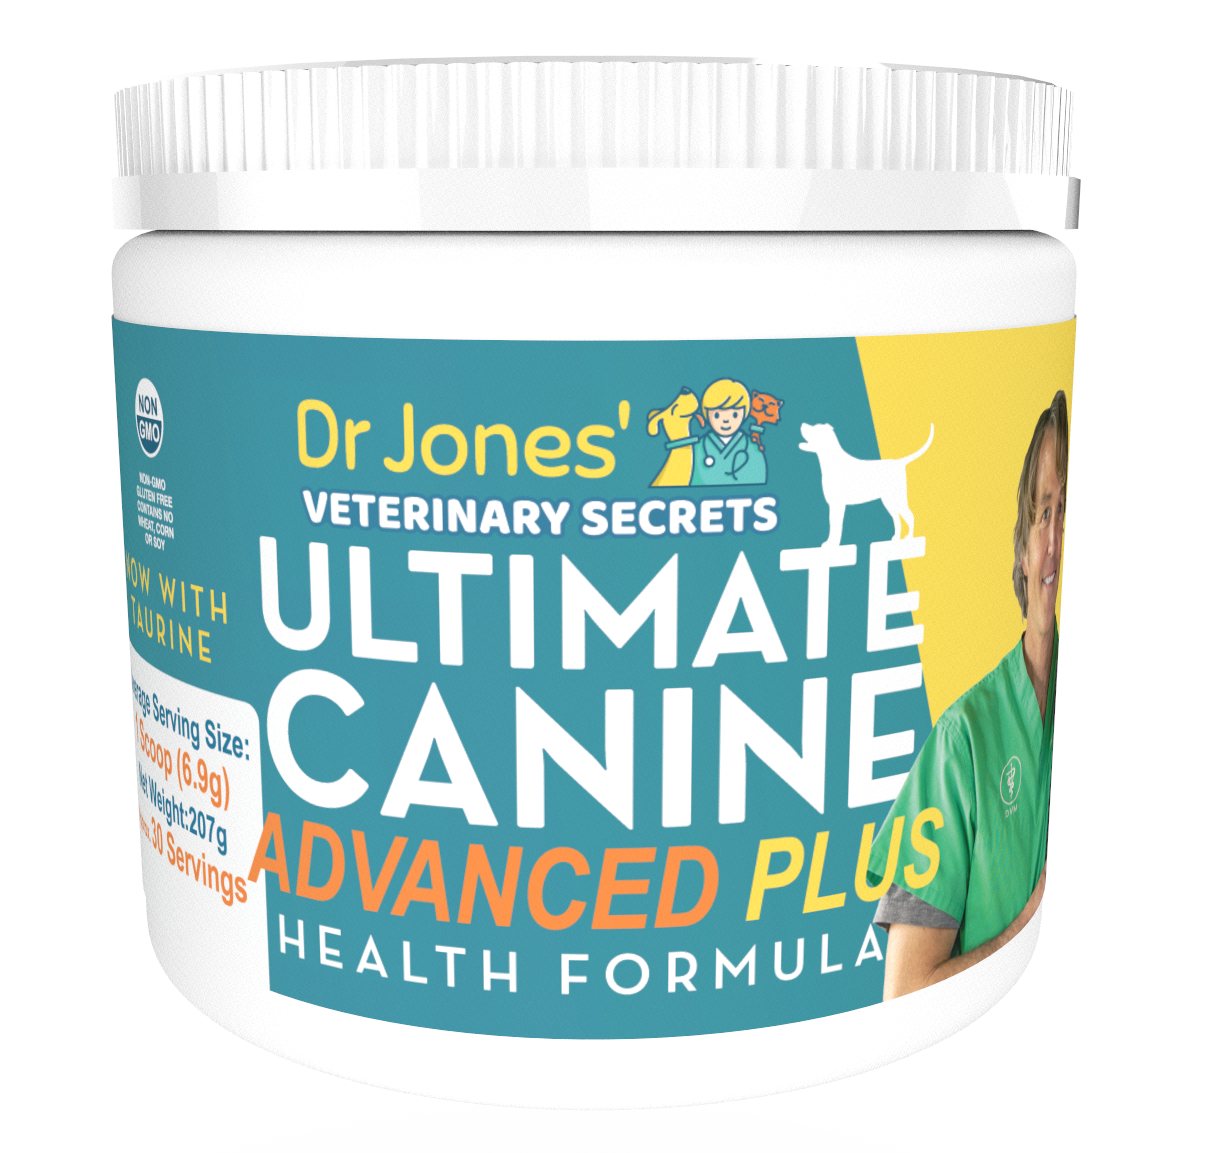 Dr. Jones' Ultimate Canine Health Formula Nutritional Supplement for Dogs